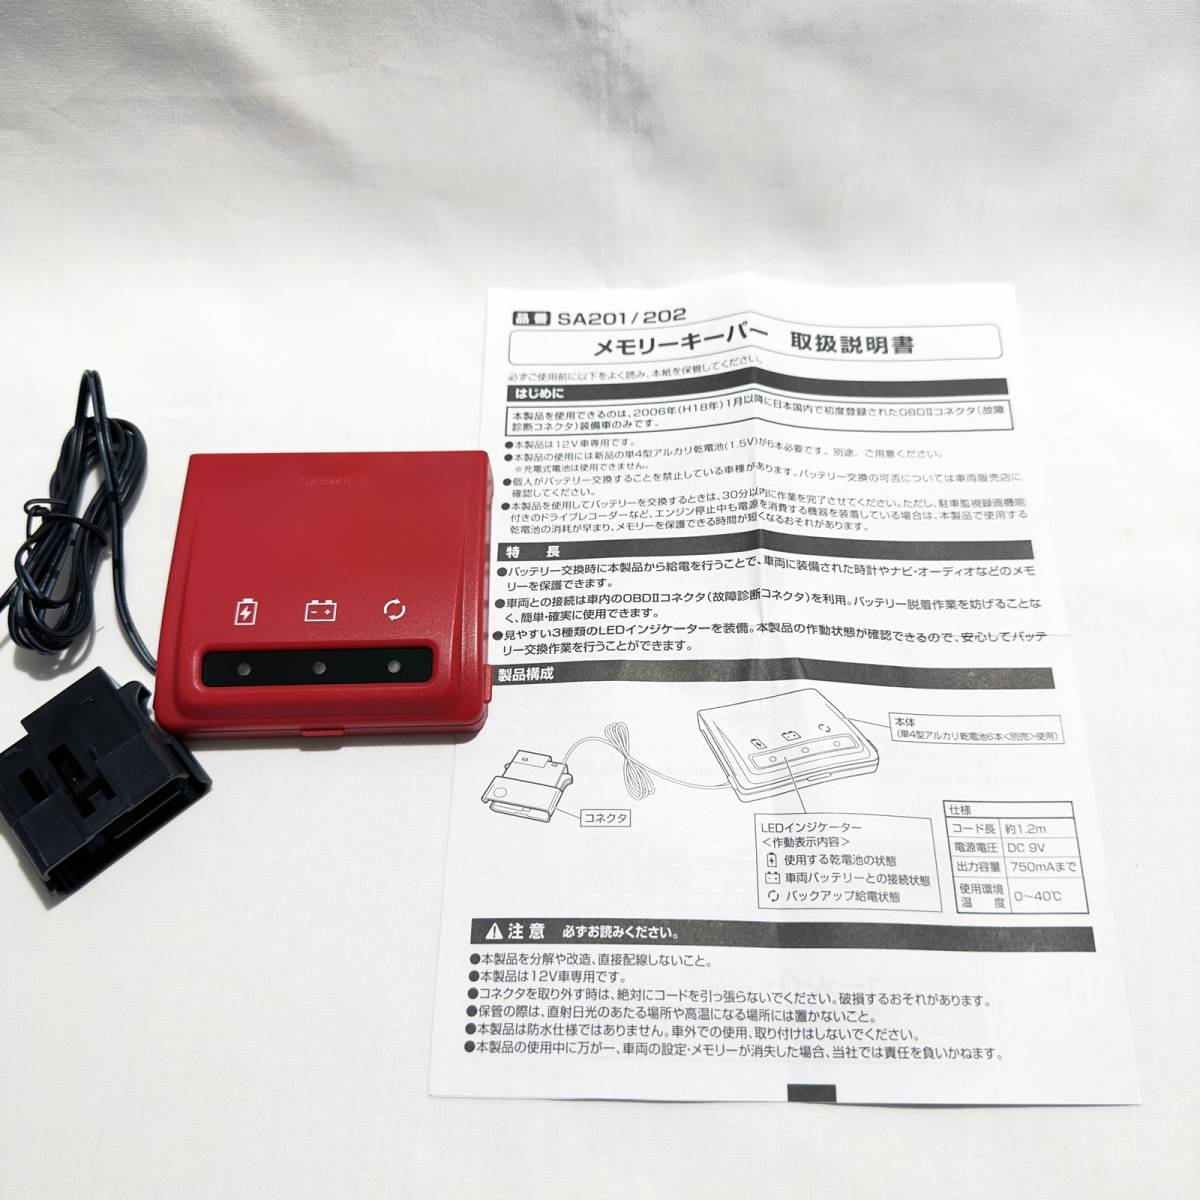 [Amazon.co.jp limitation ] Carmate / Carmate memory keeper RED SA202 / new goods unused 